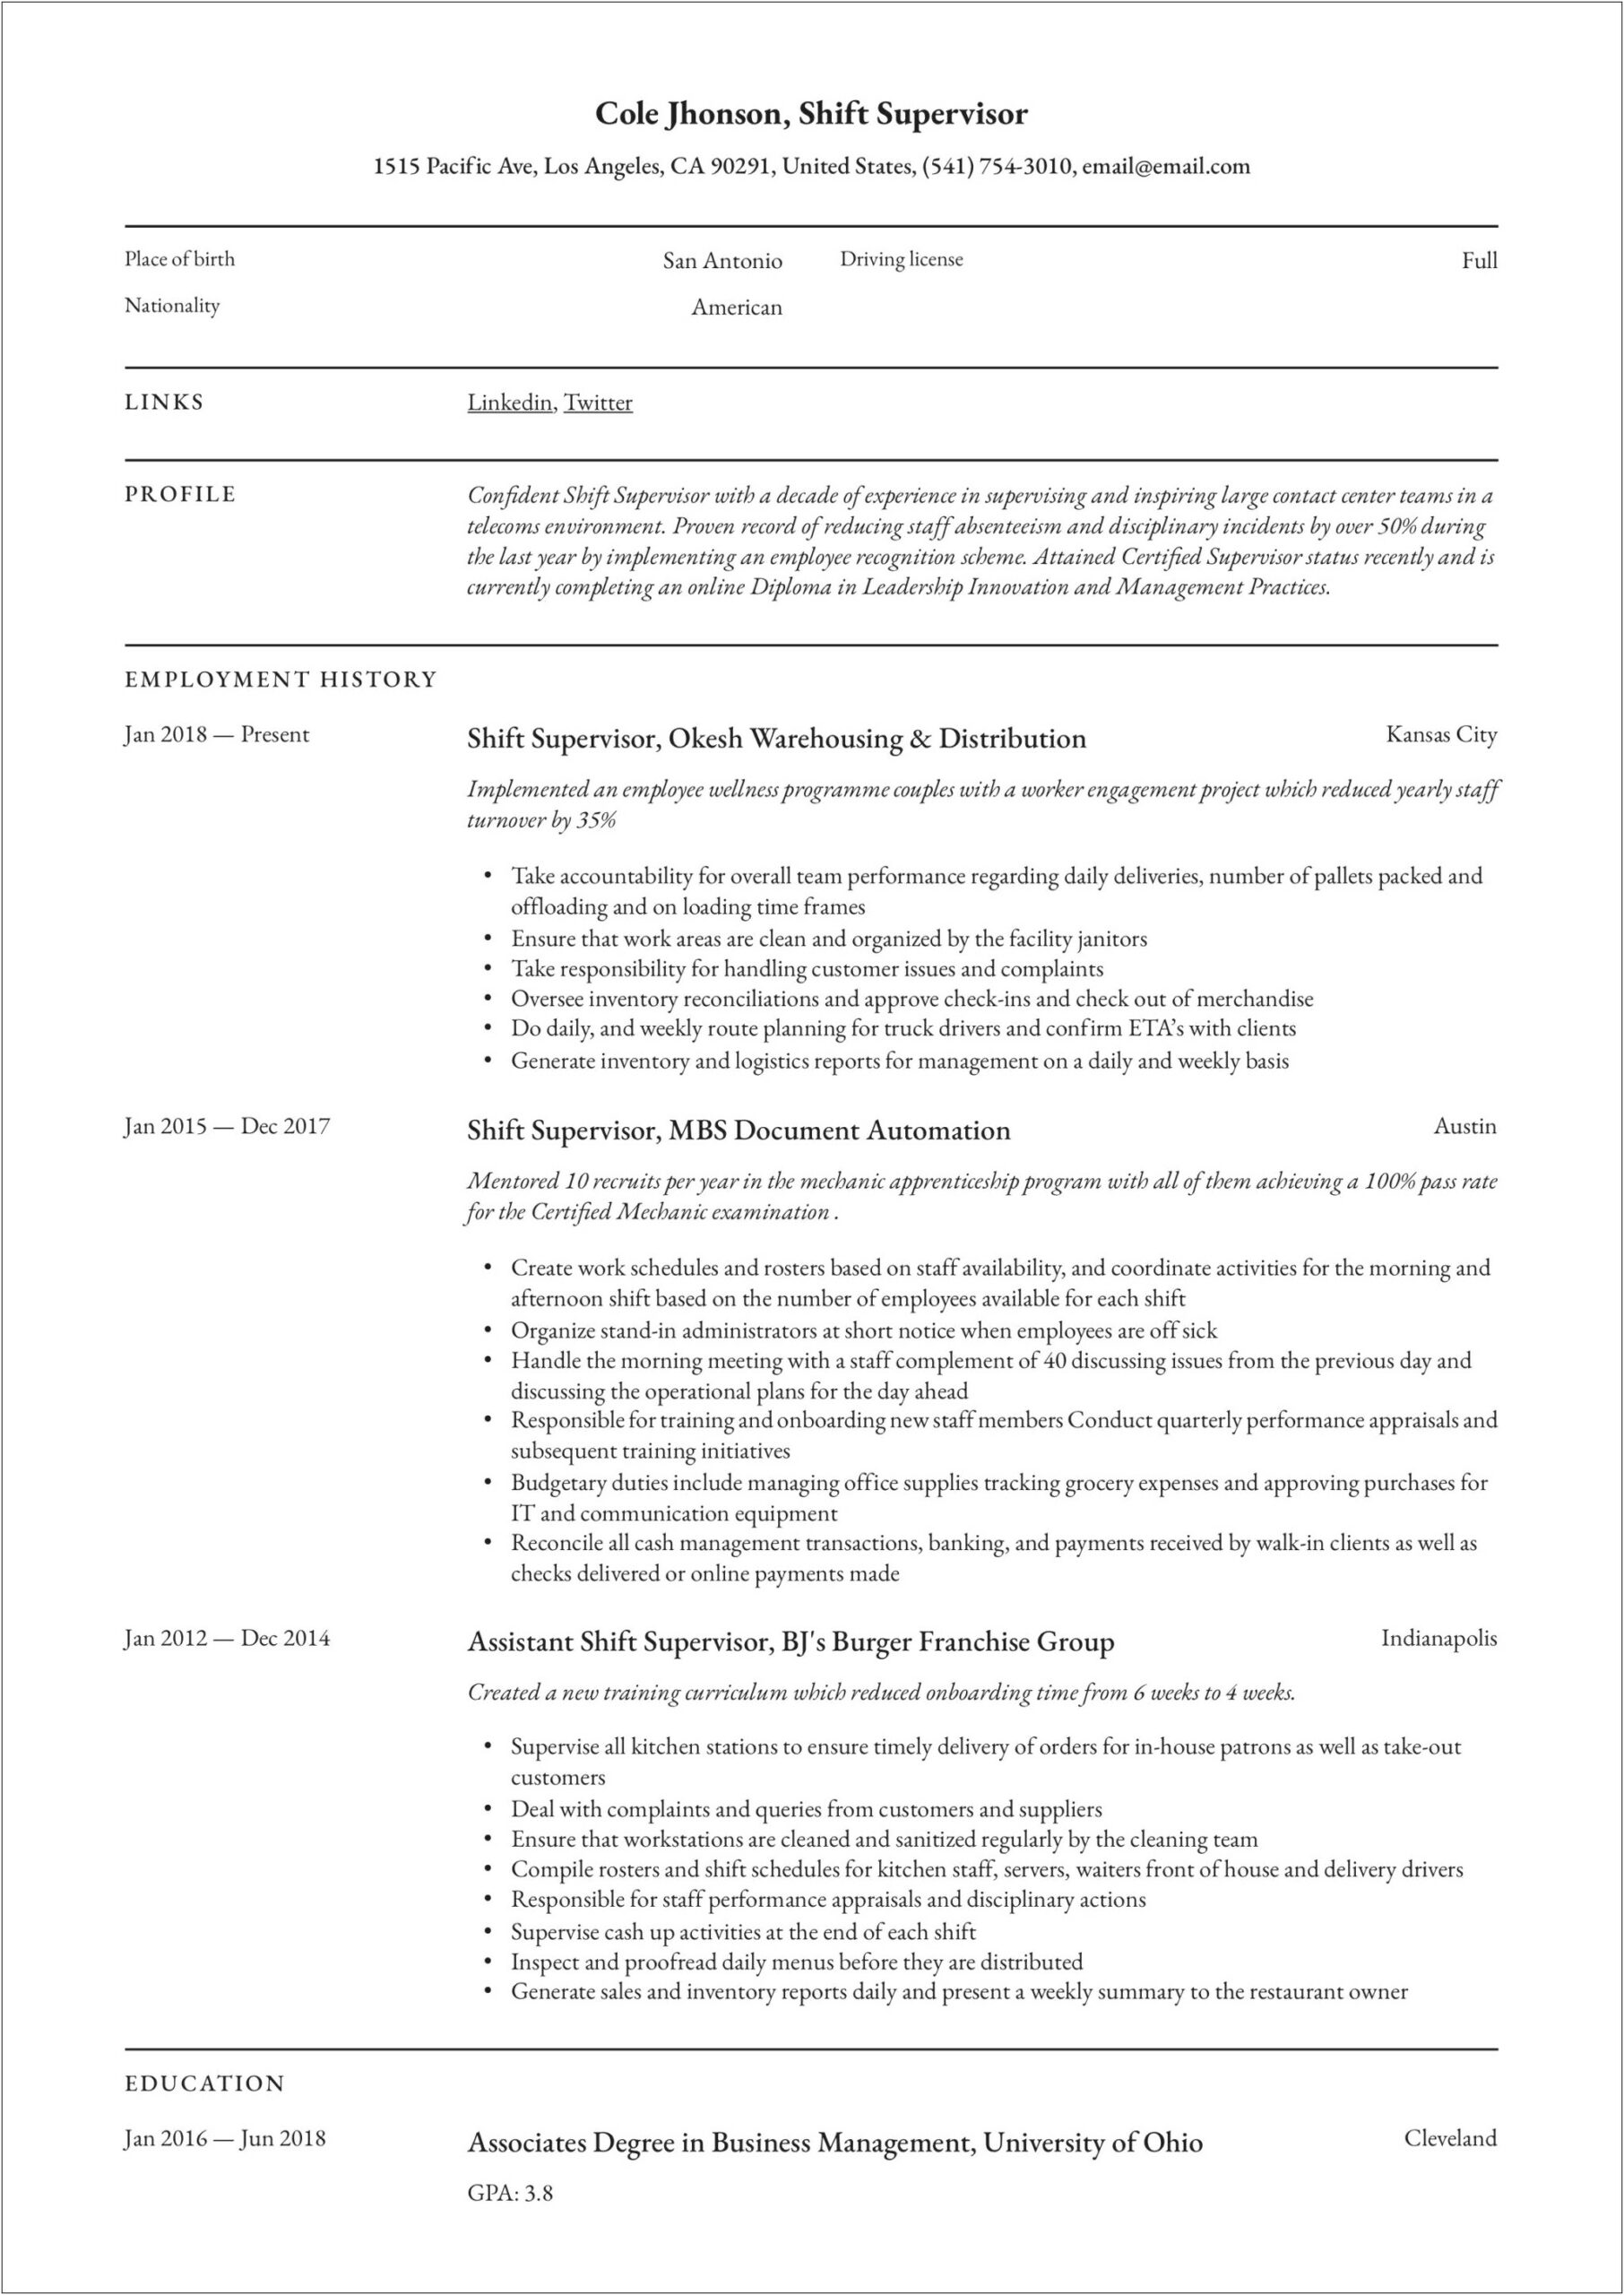 Resume Job Description For Floor Installer